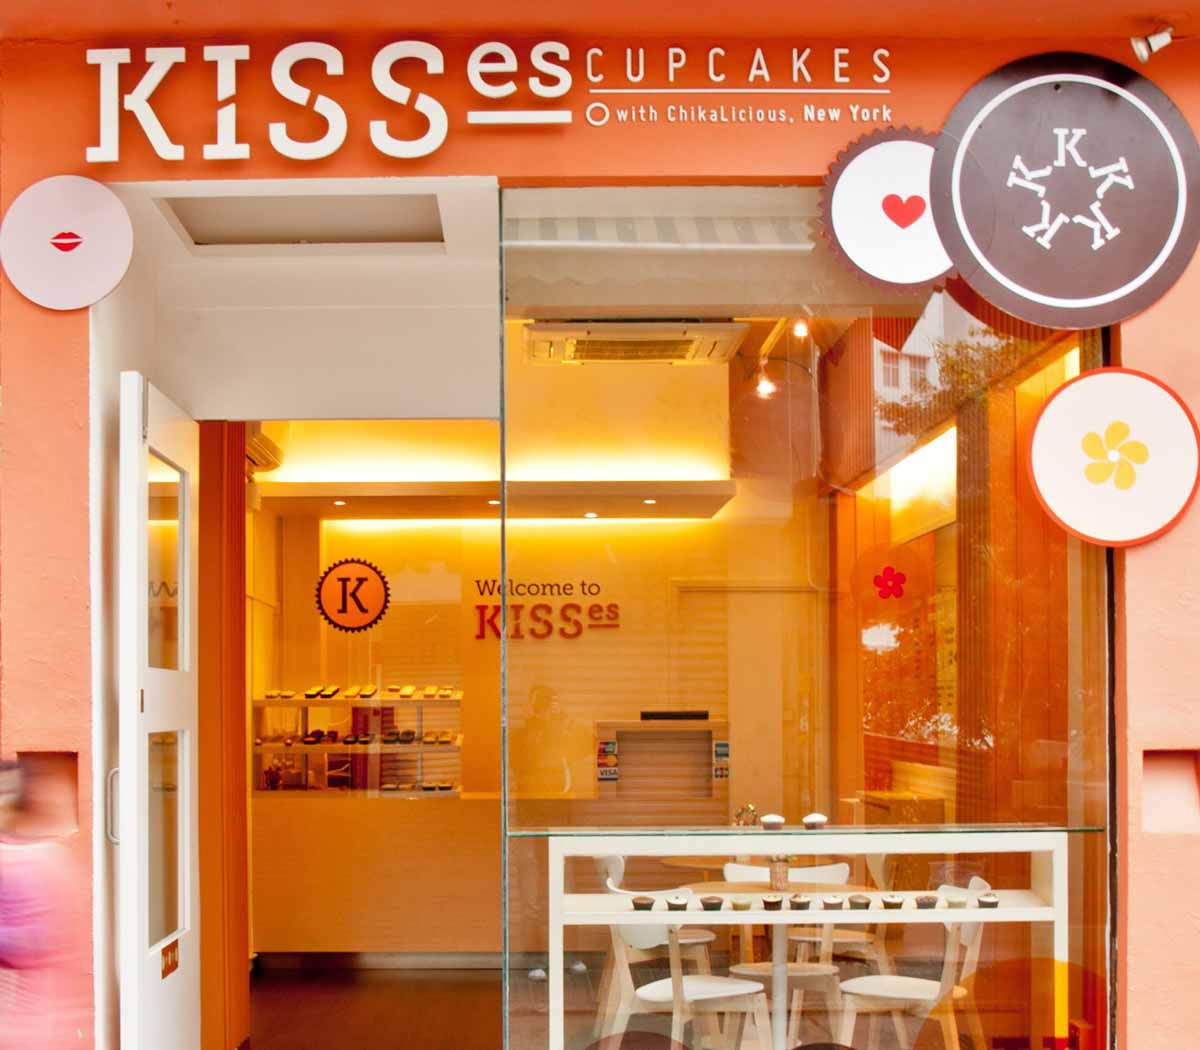 Kiss Cupcake Cakaery Dengan Warna Oranye Cara Memilih Warna Logo, Kemasan dan Interior Toko Roti Kue Serta Cafe